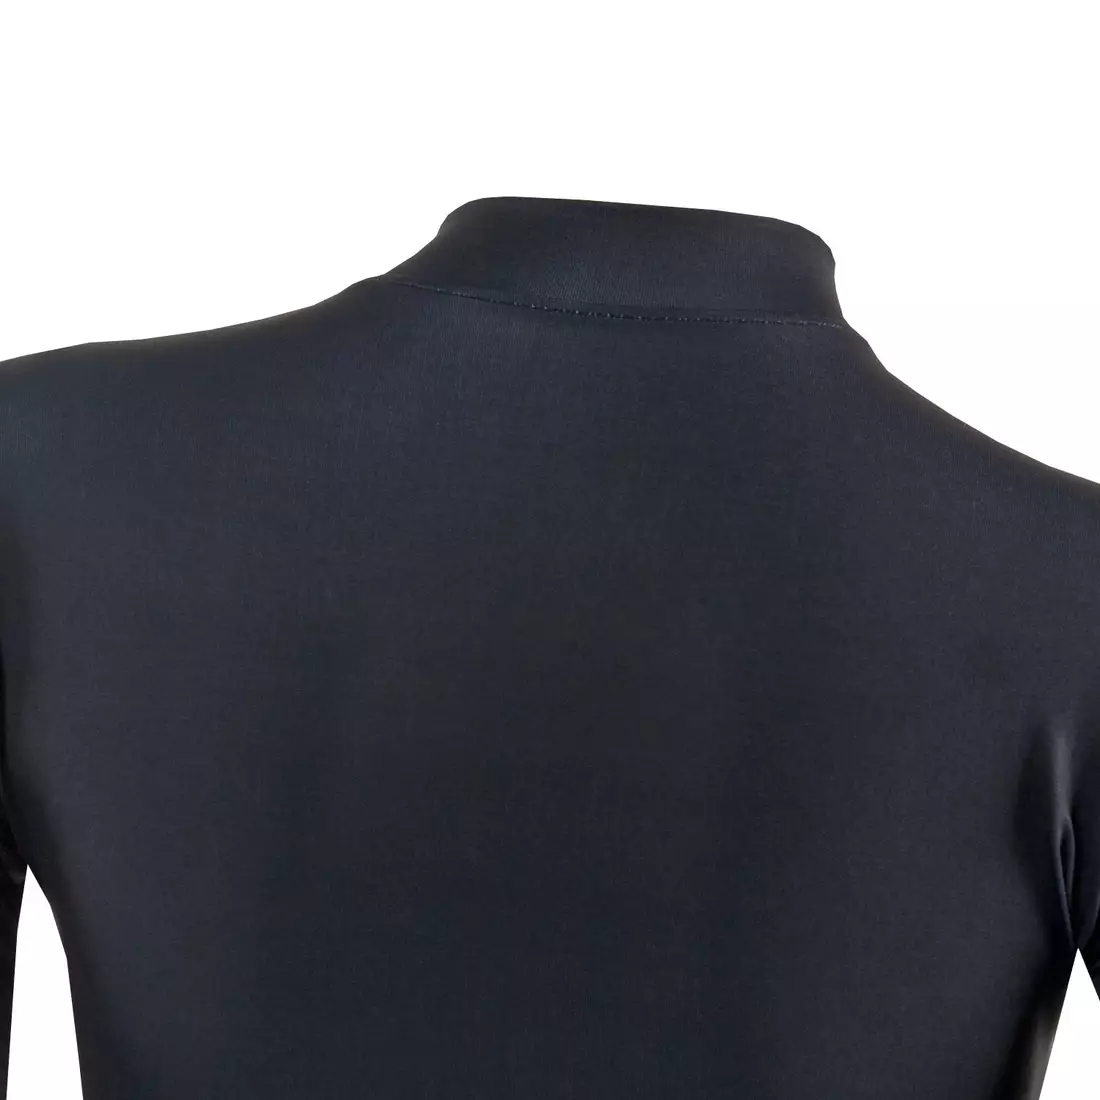 KAYMAQ tricou de ciclism cu mâneci scurte pentru femei negru KYQ-SS-2001-4